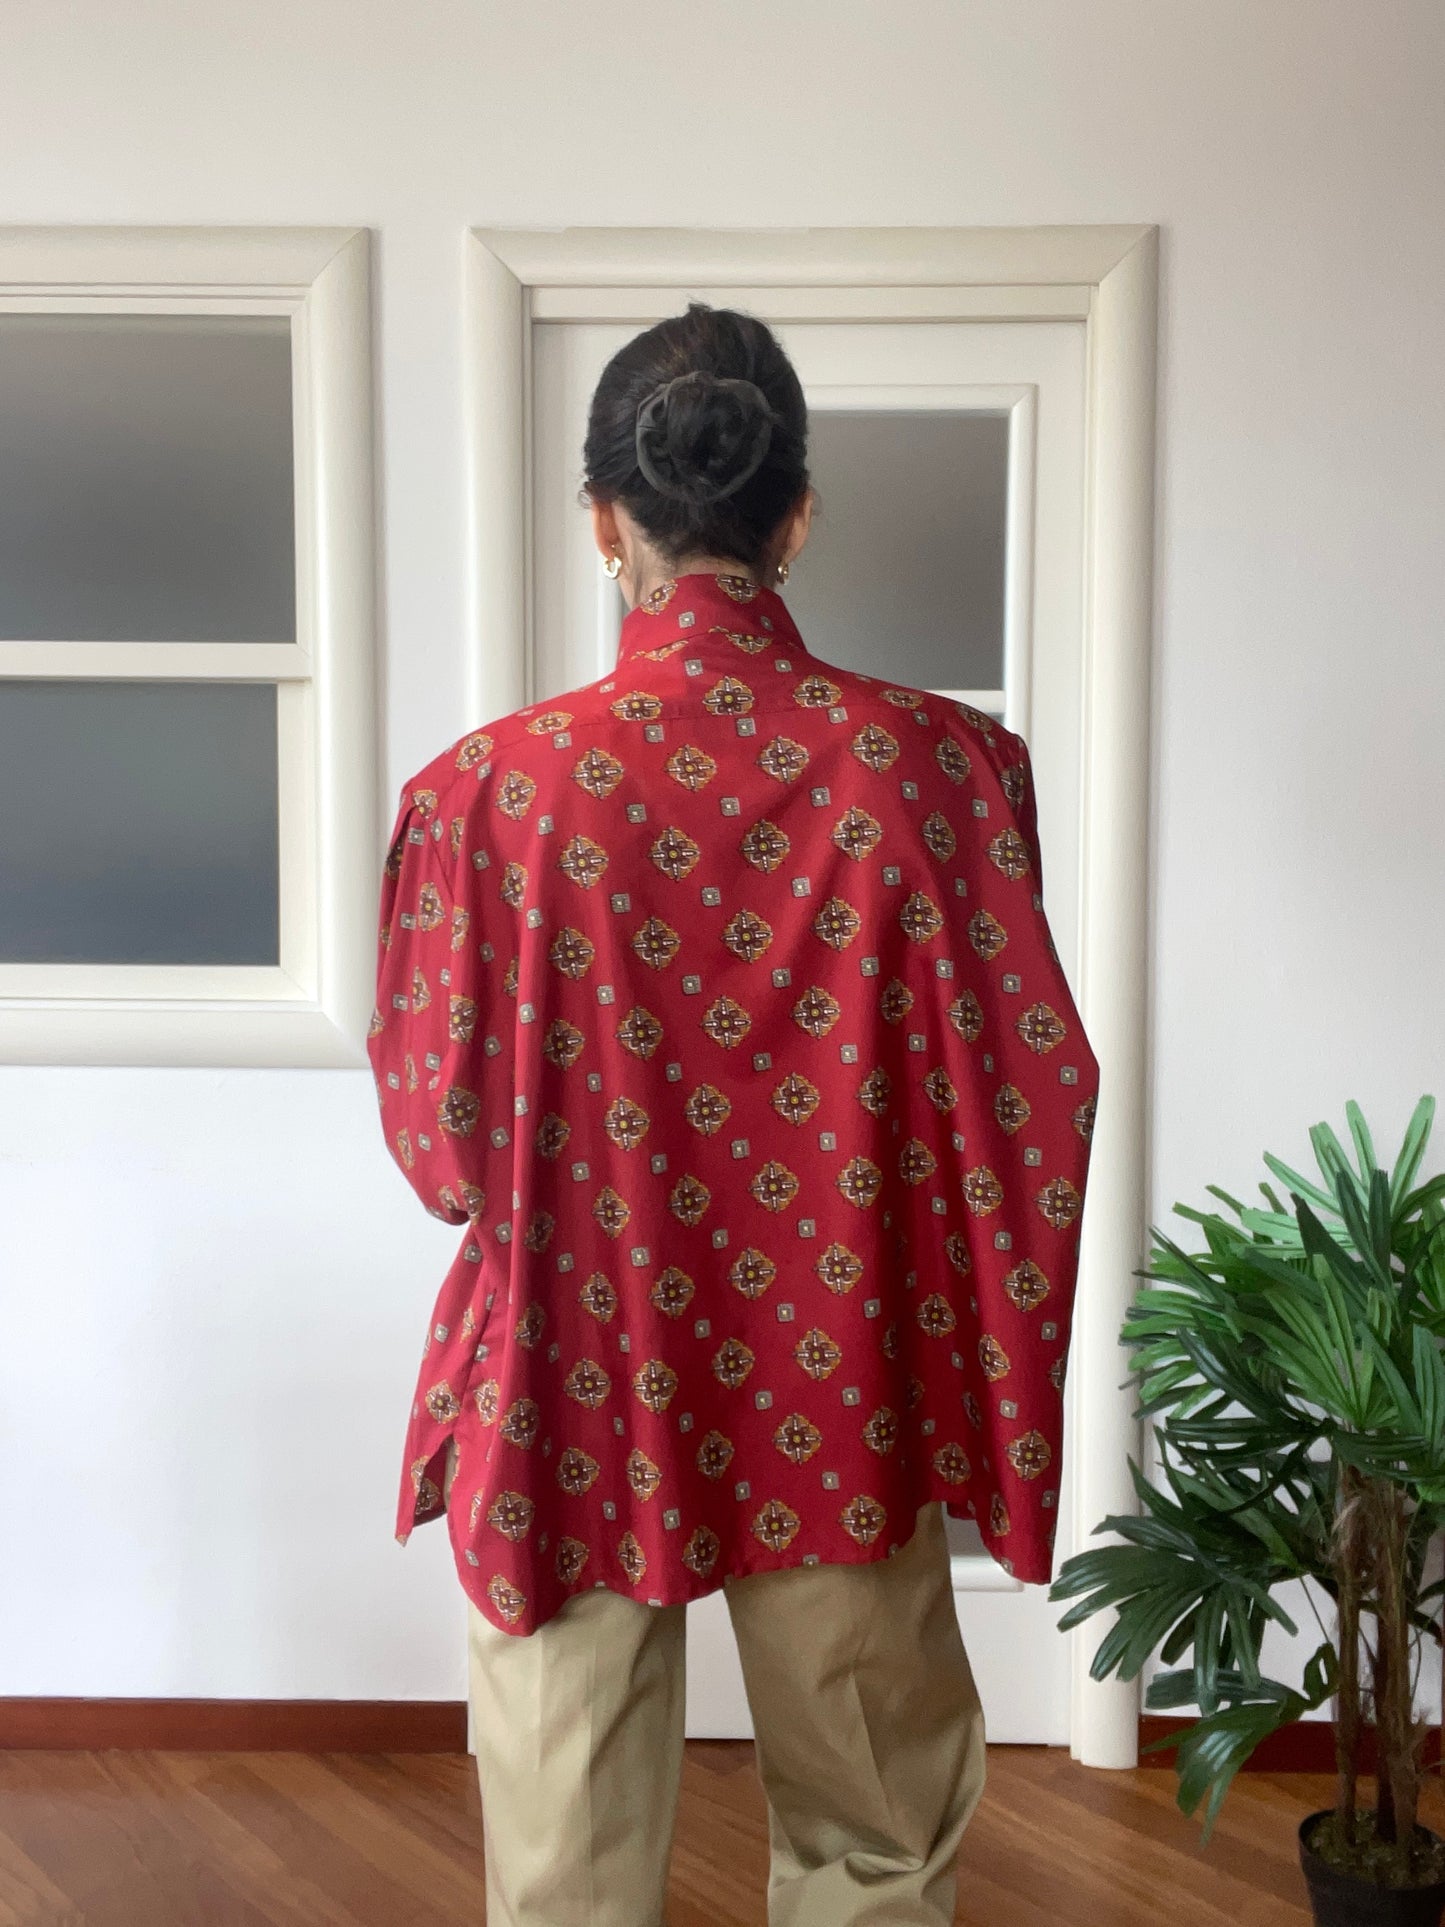 Printed romantic blouse